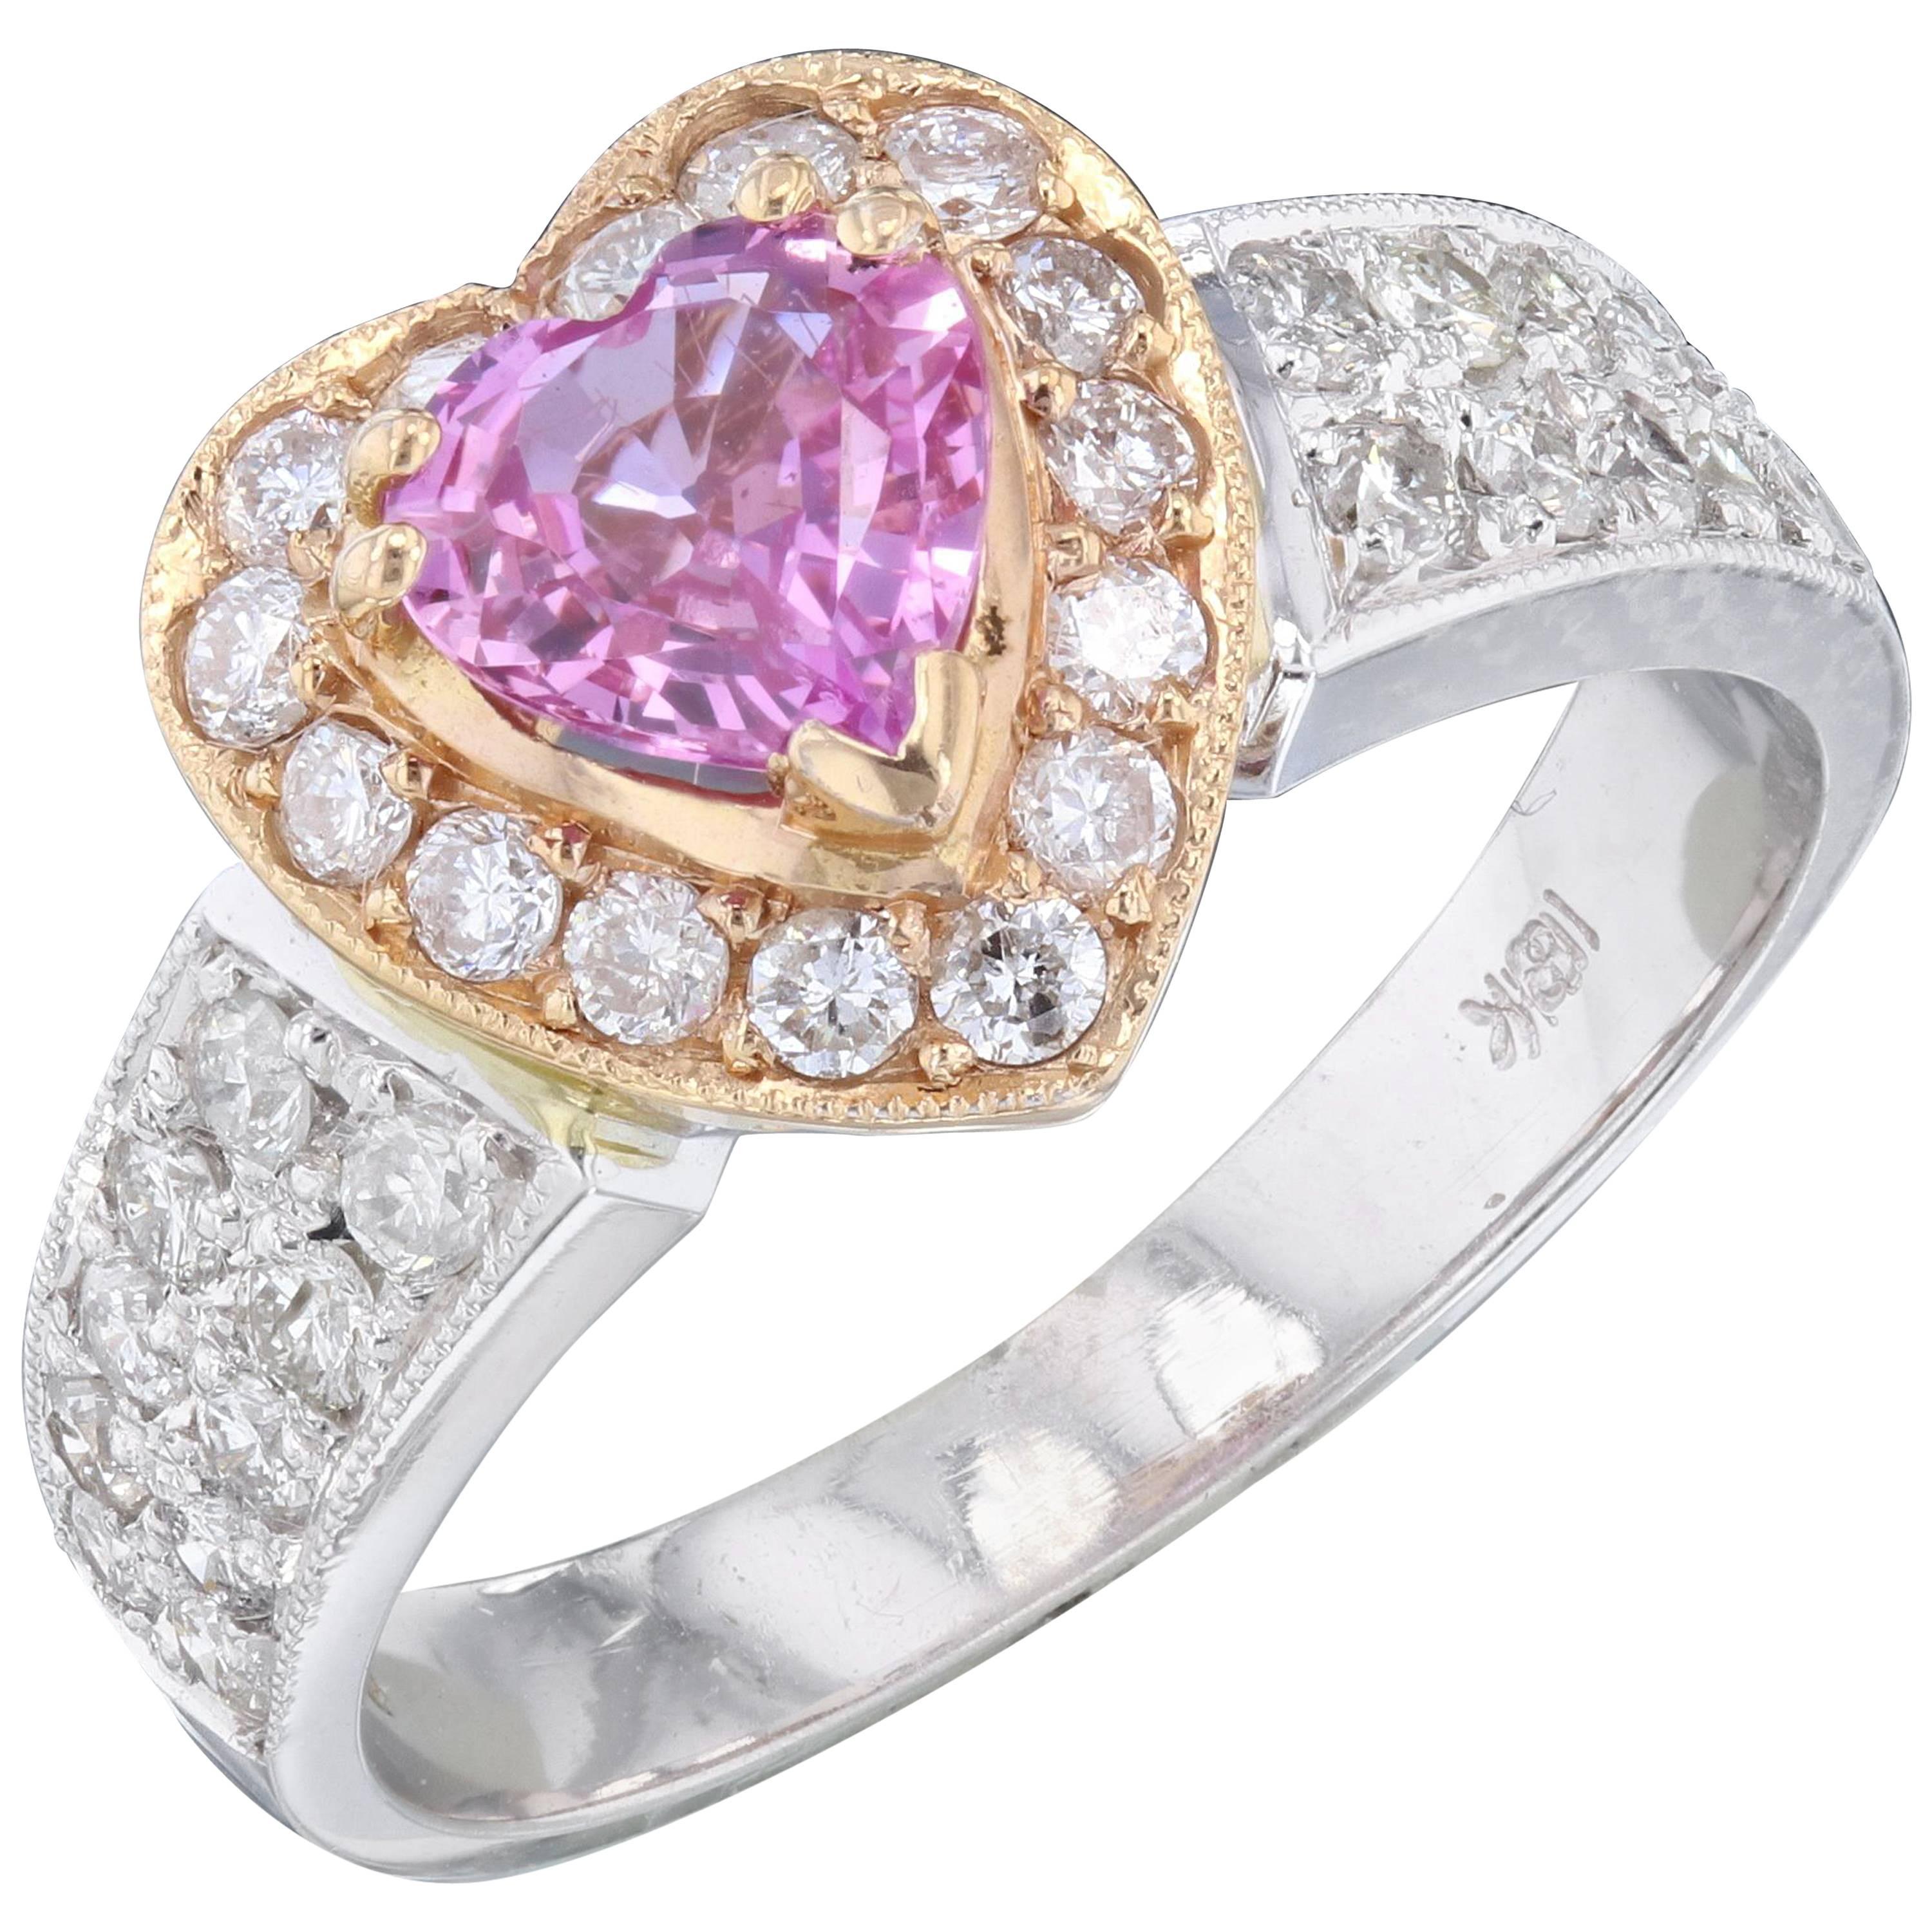 1.52 Carat Pink Sapphire Diamond Engagement Ring